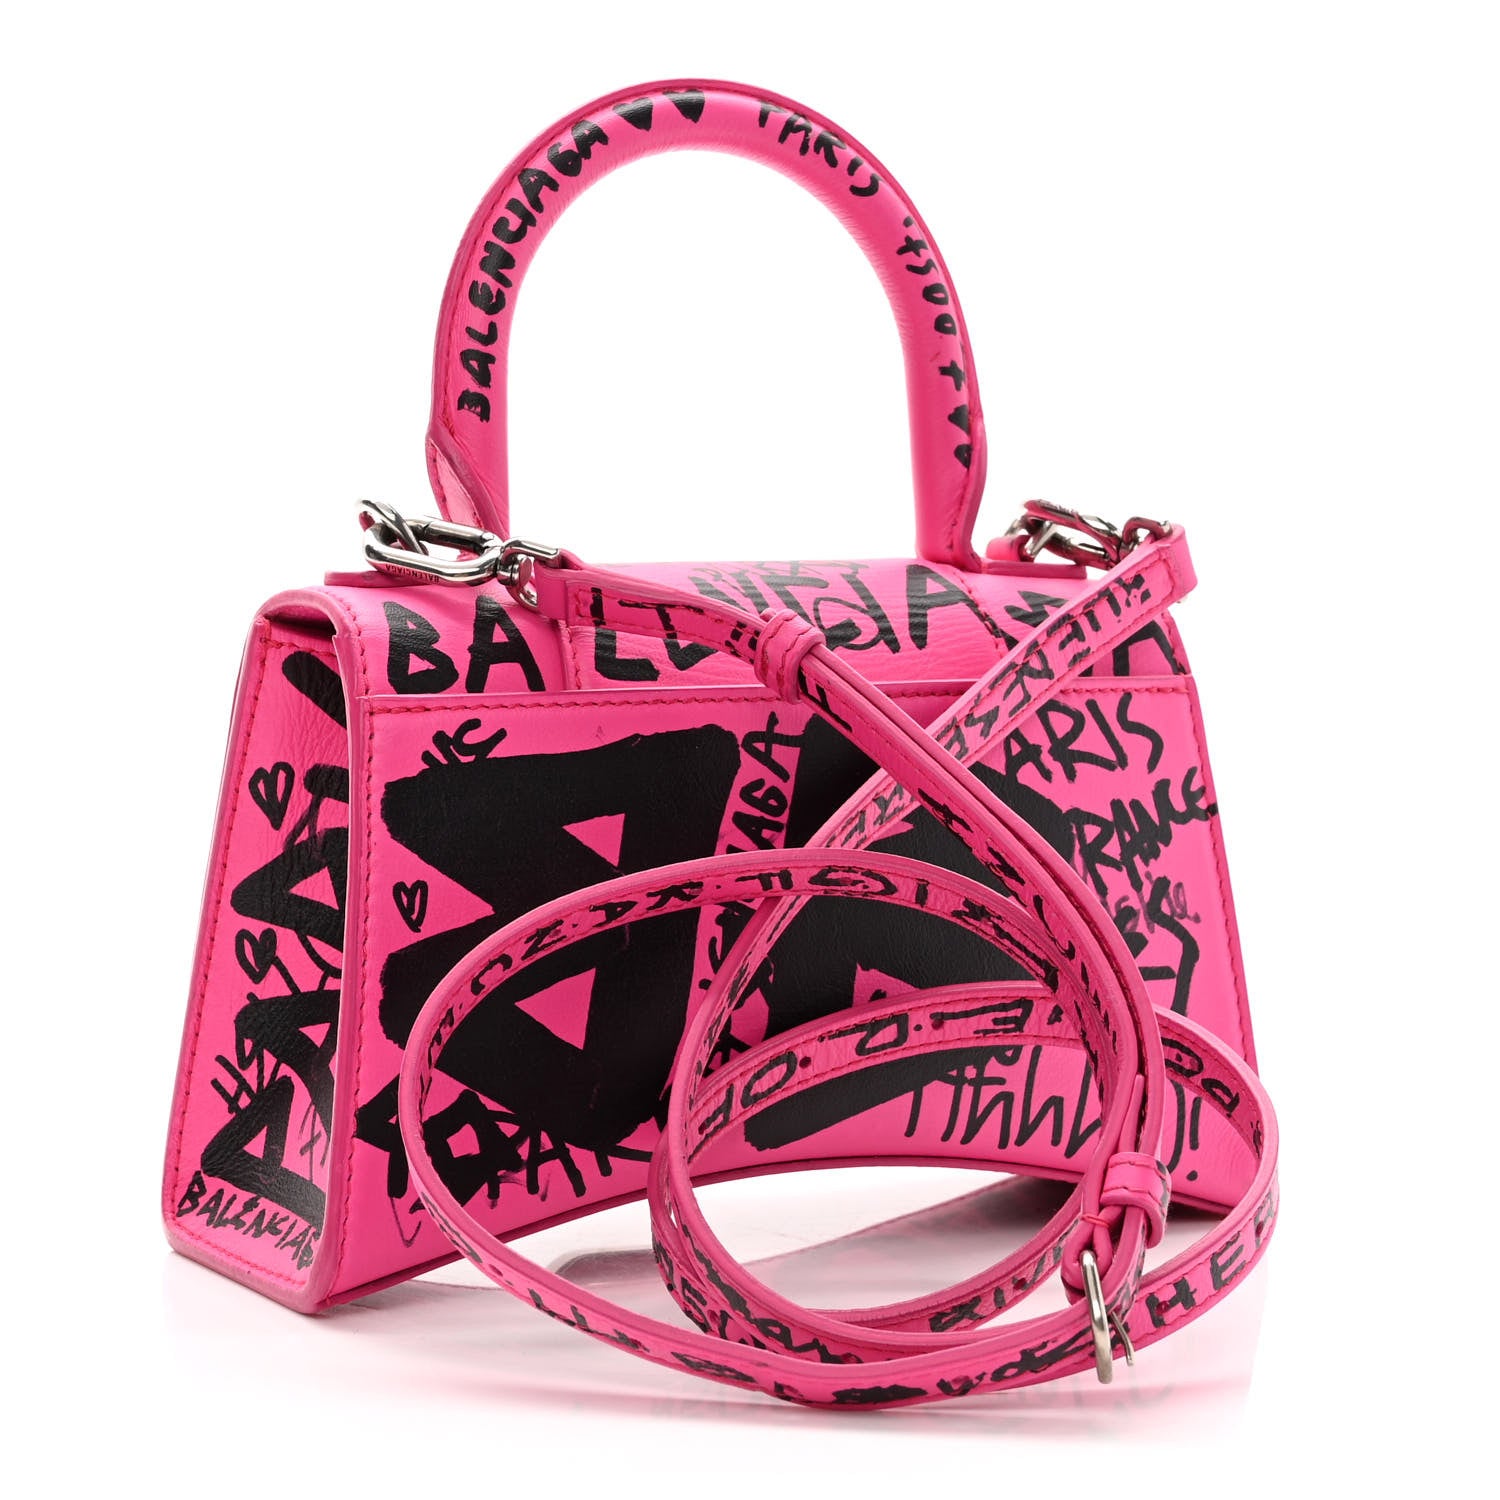 Balenciaga Hourglass XS top handle pink graffiti